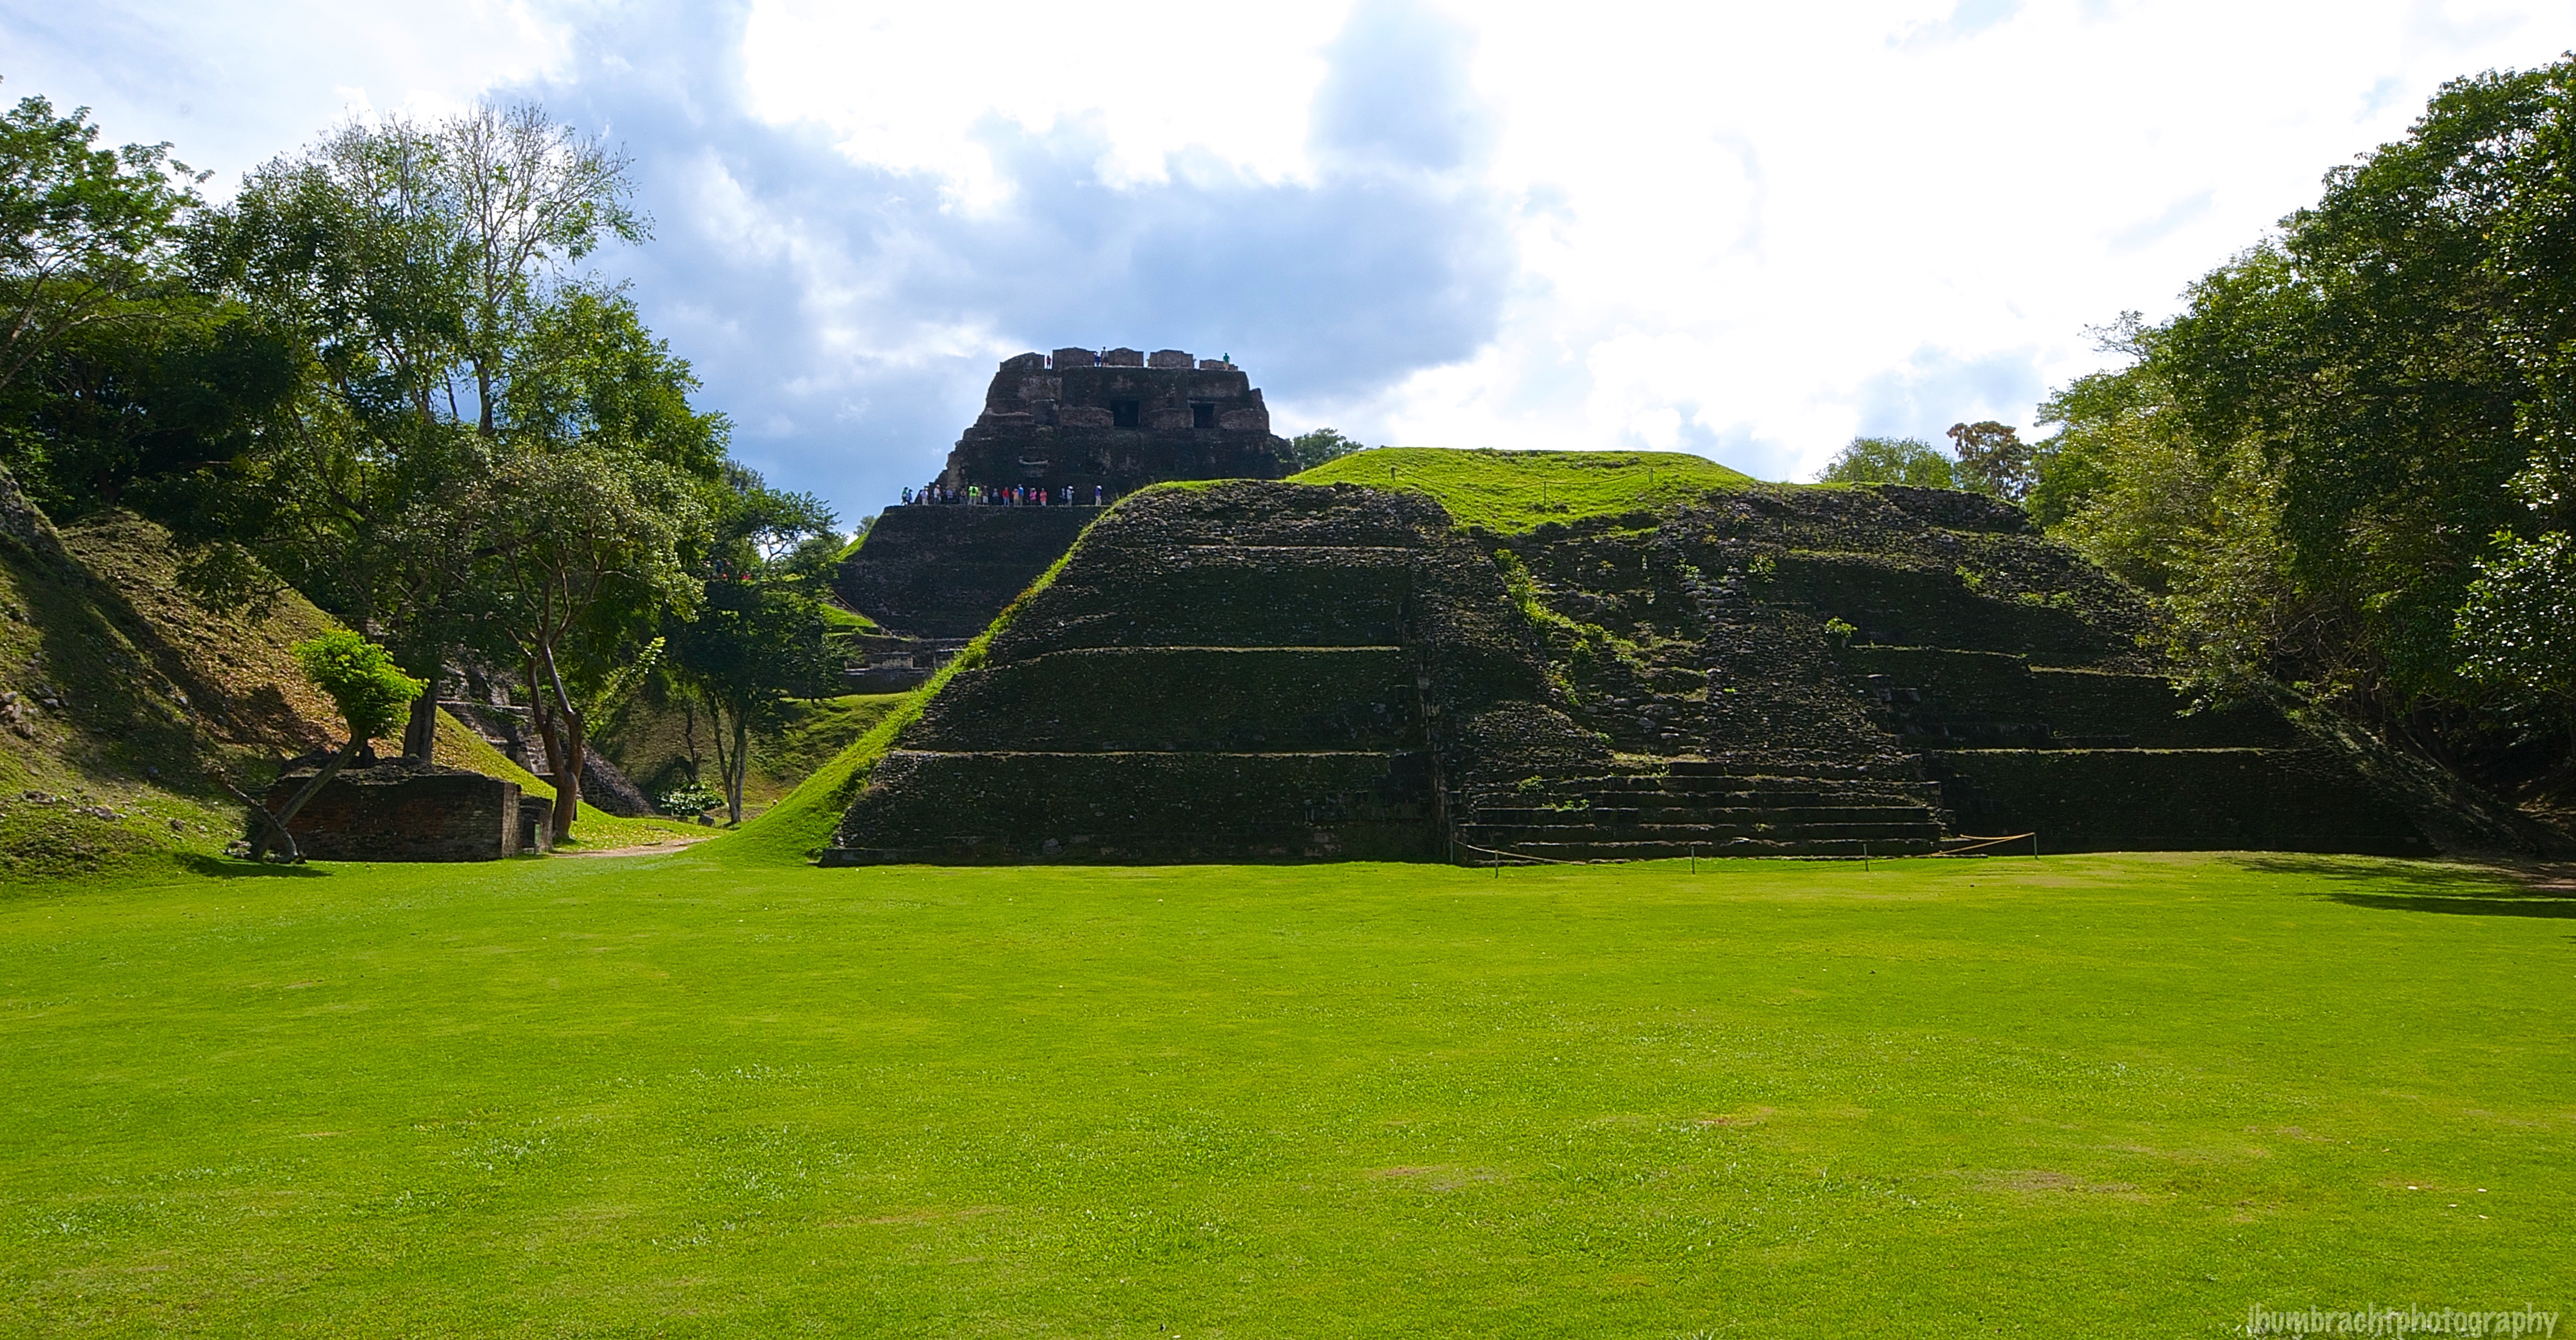 Xunantunich Maya Site | El Castillo | San Jose Succotz Belize | Photo taken by Indiana Architectural Photographer Jason Humbracht 